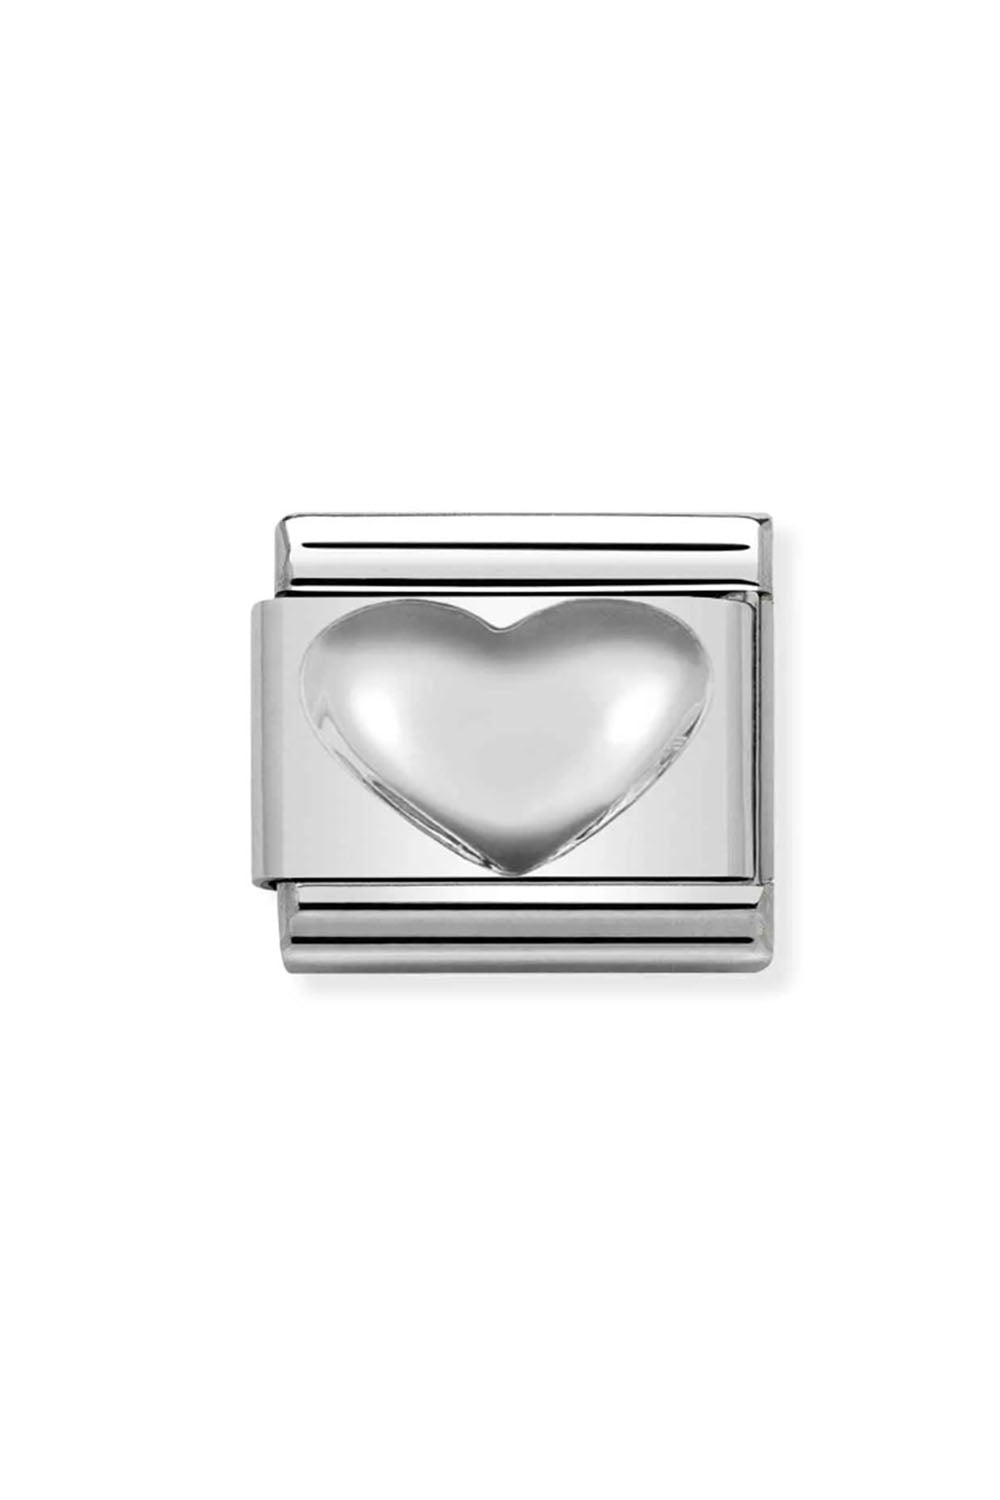 Oxidised Symbol 925 Sterling raised Silver Heart